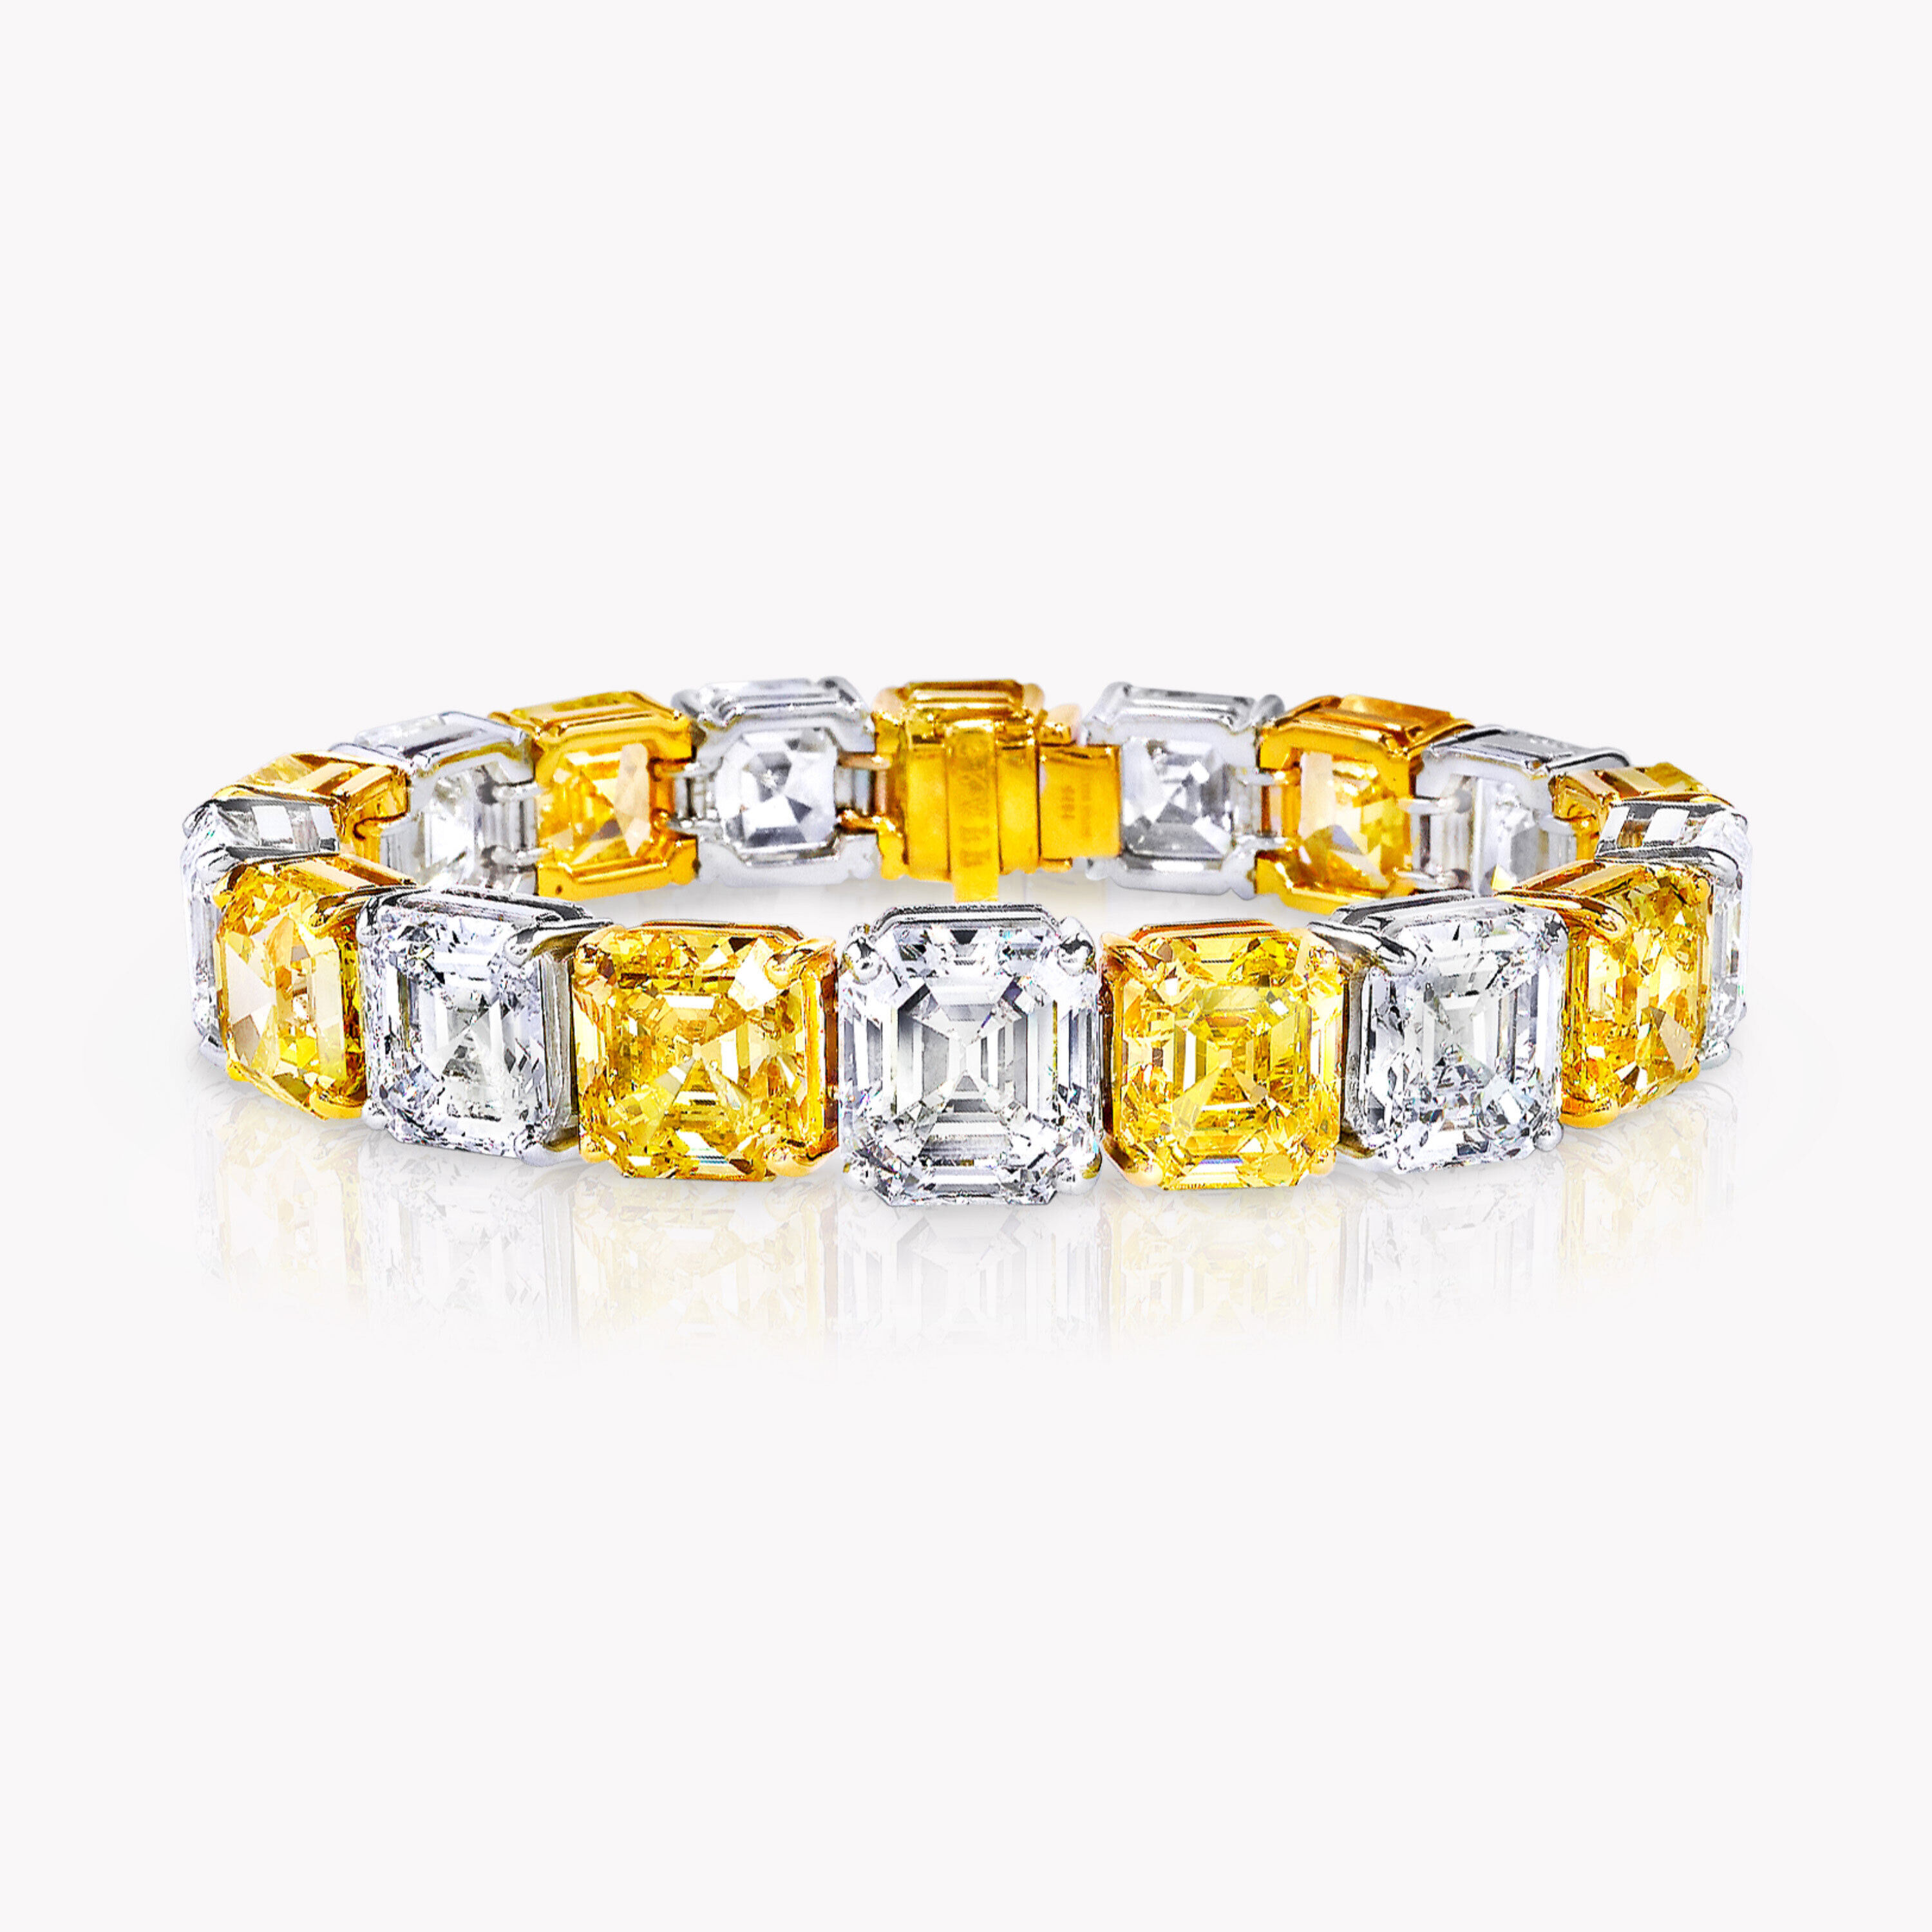 A Graff yellow and white diamond high jewellery bracelet